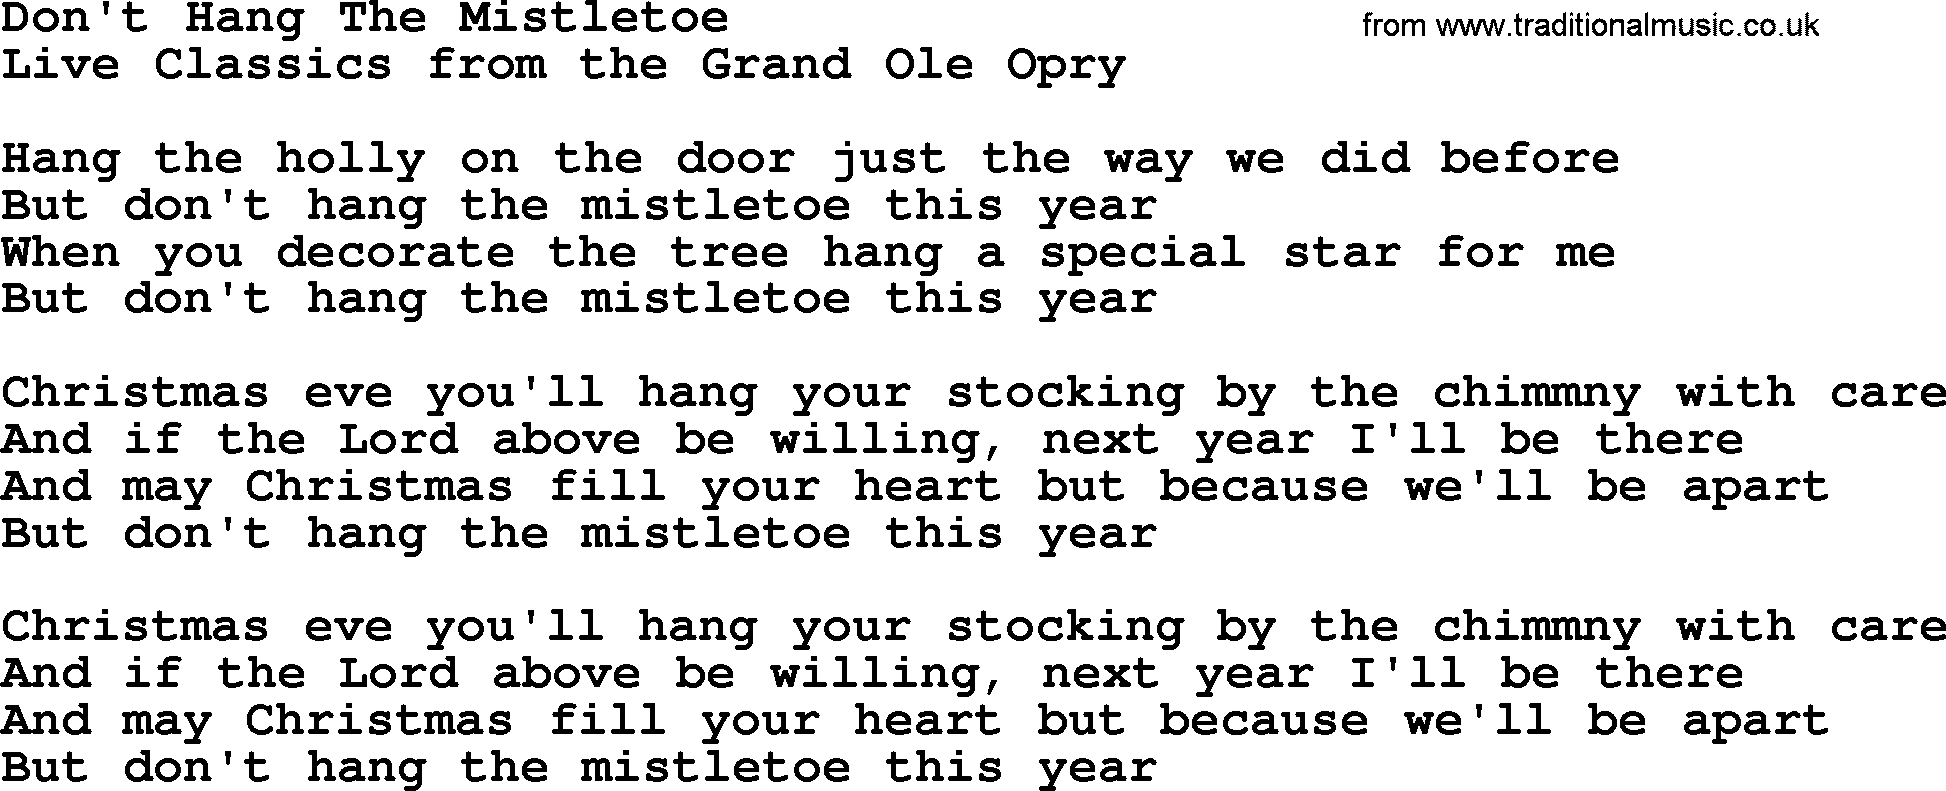 Marty Robbins song: Don't Hang The Mistletoe, lyrics